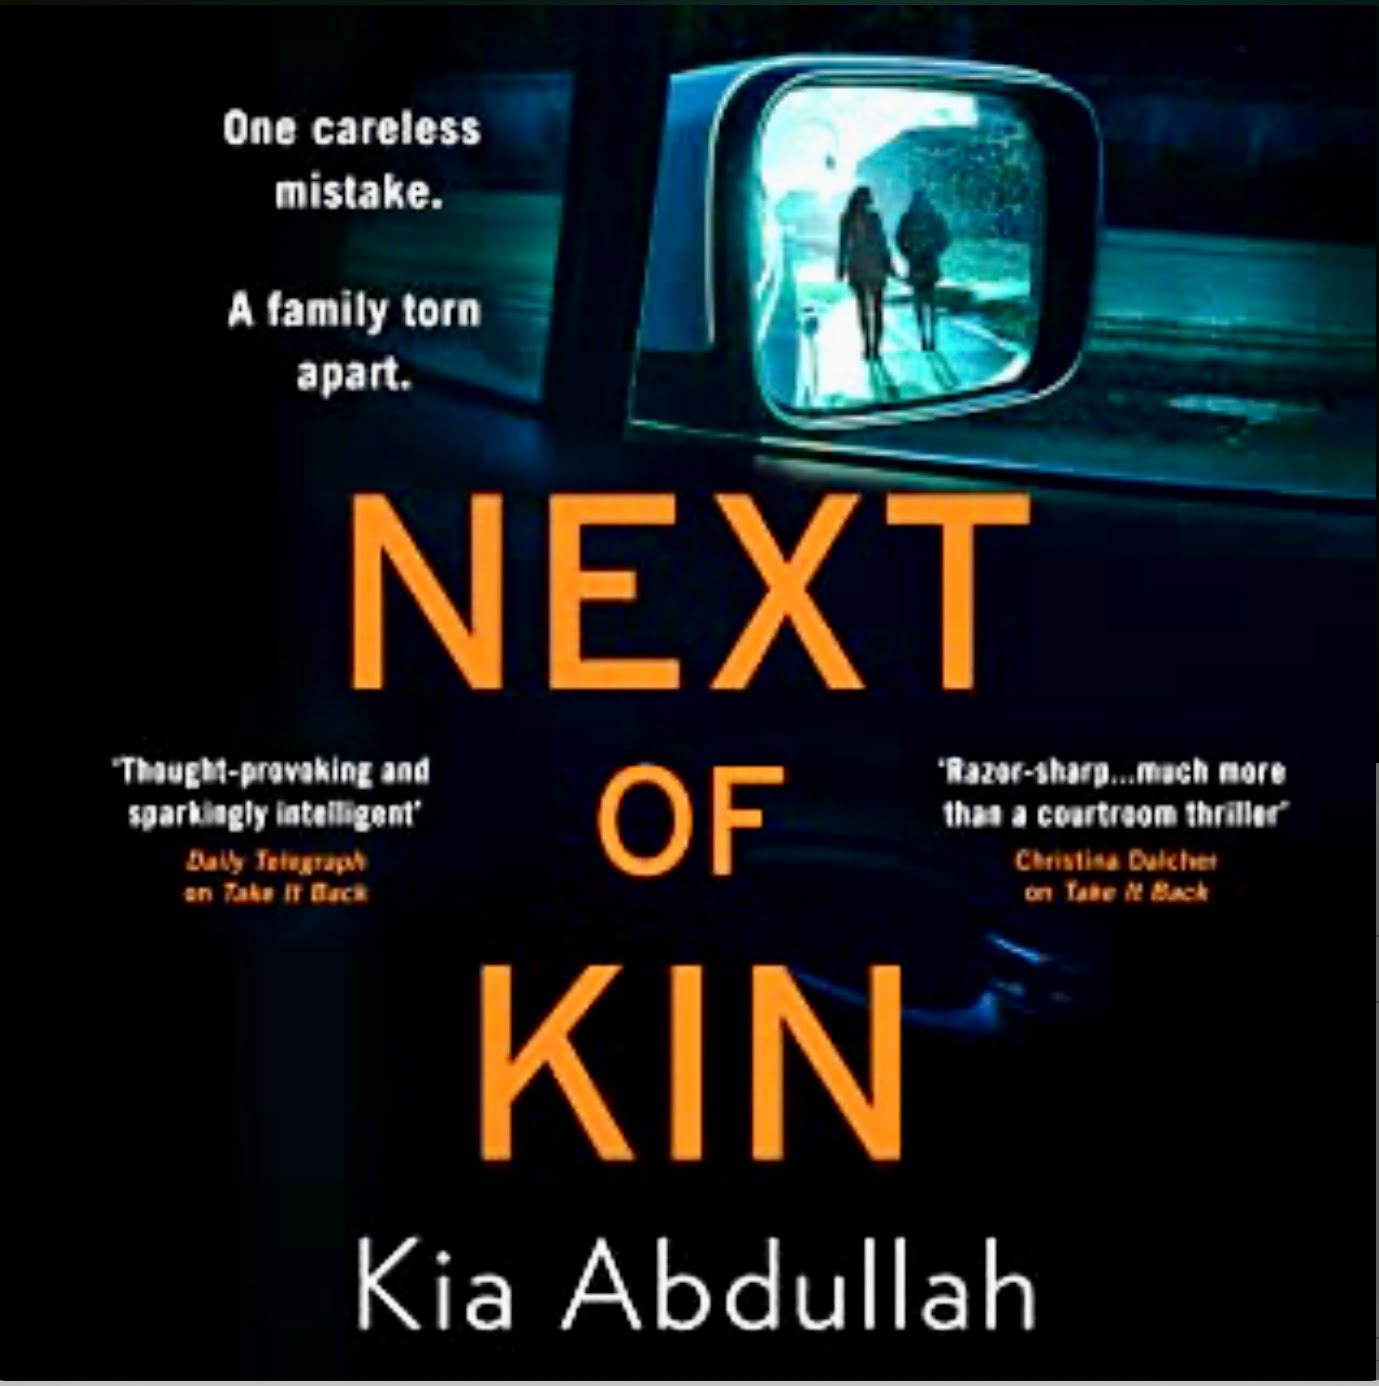 NEXT OF KIN BY KIA ABDULLAH – BOOK REVIEW